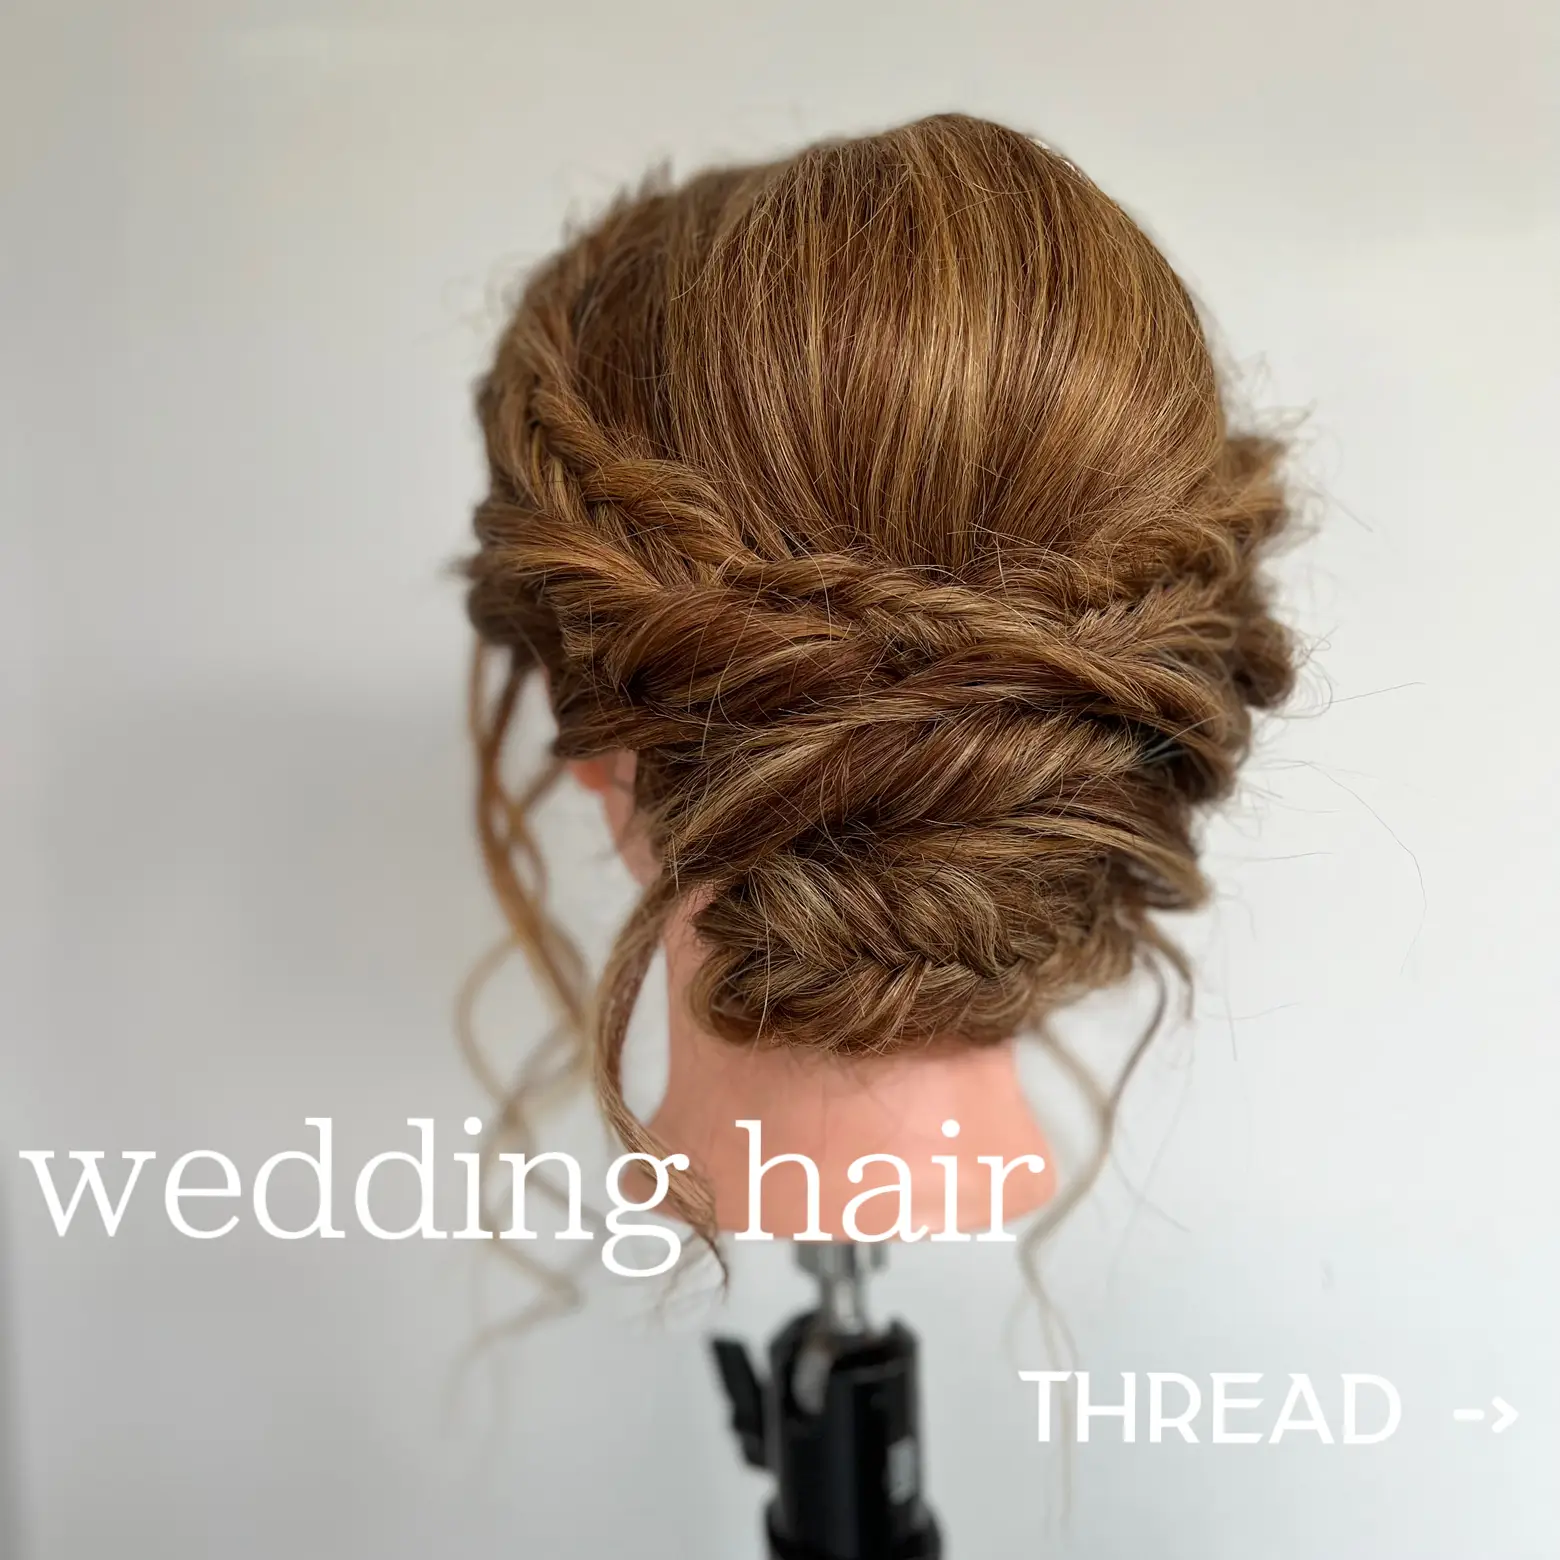 bridal hair thread- save for ur wedding day💍➡️, Gallery posted by Macie  Stafford